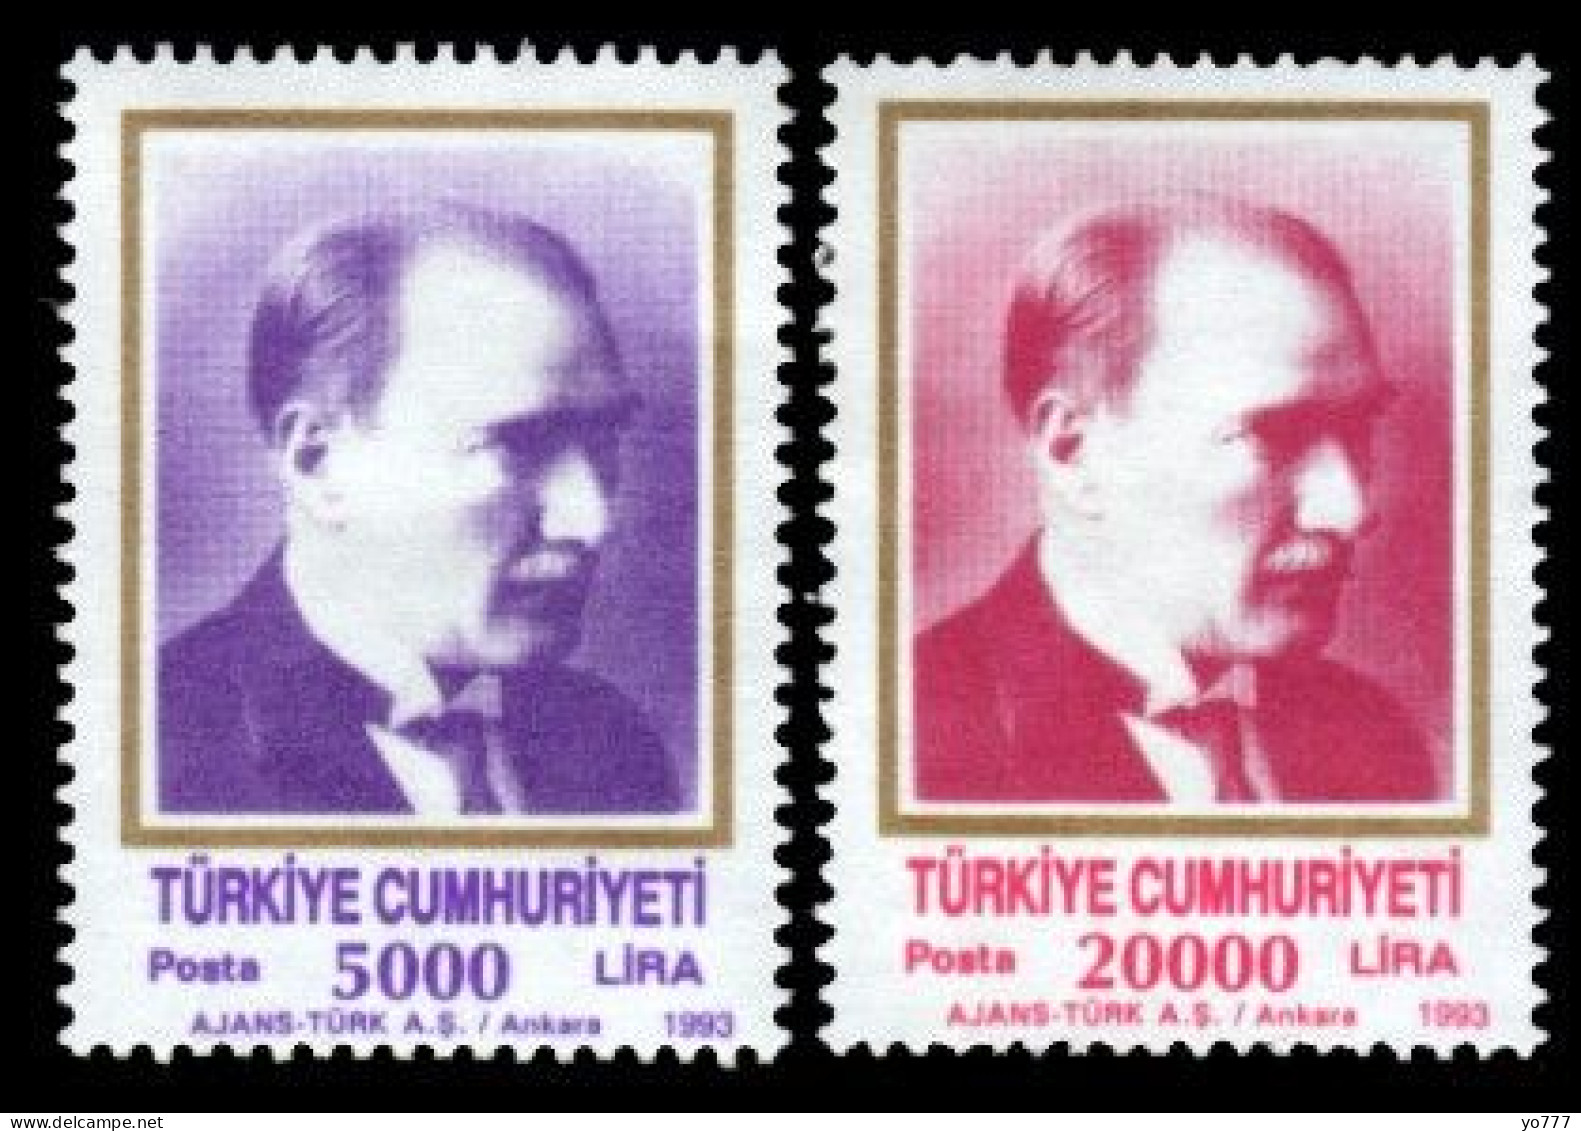 (3000-01) TURKEY REGULAR ISSUE STAMPS MNH** - Nuevos